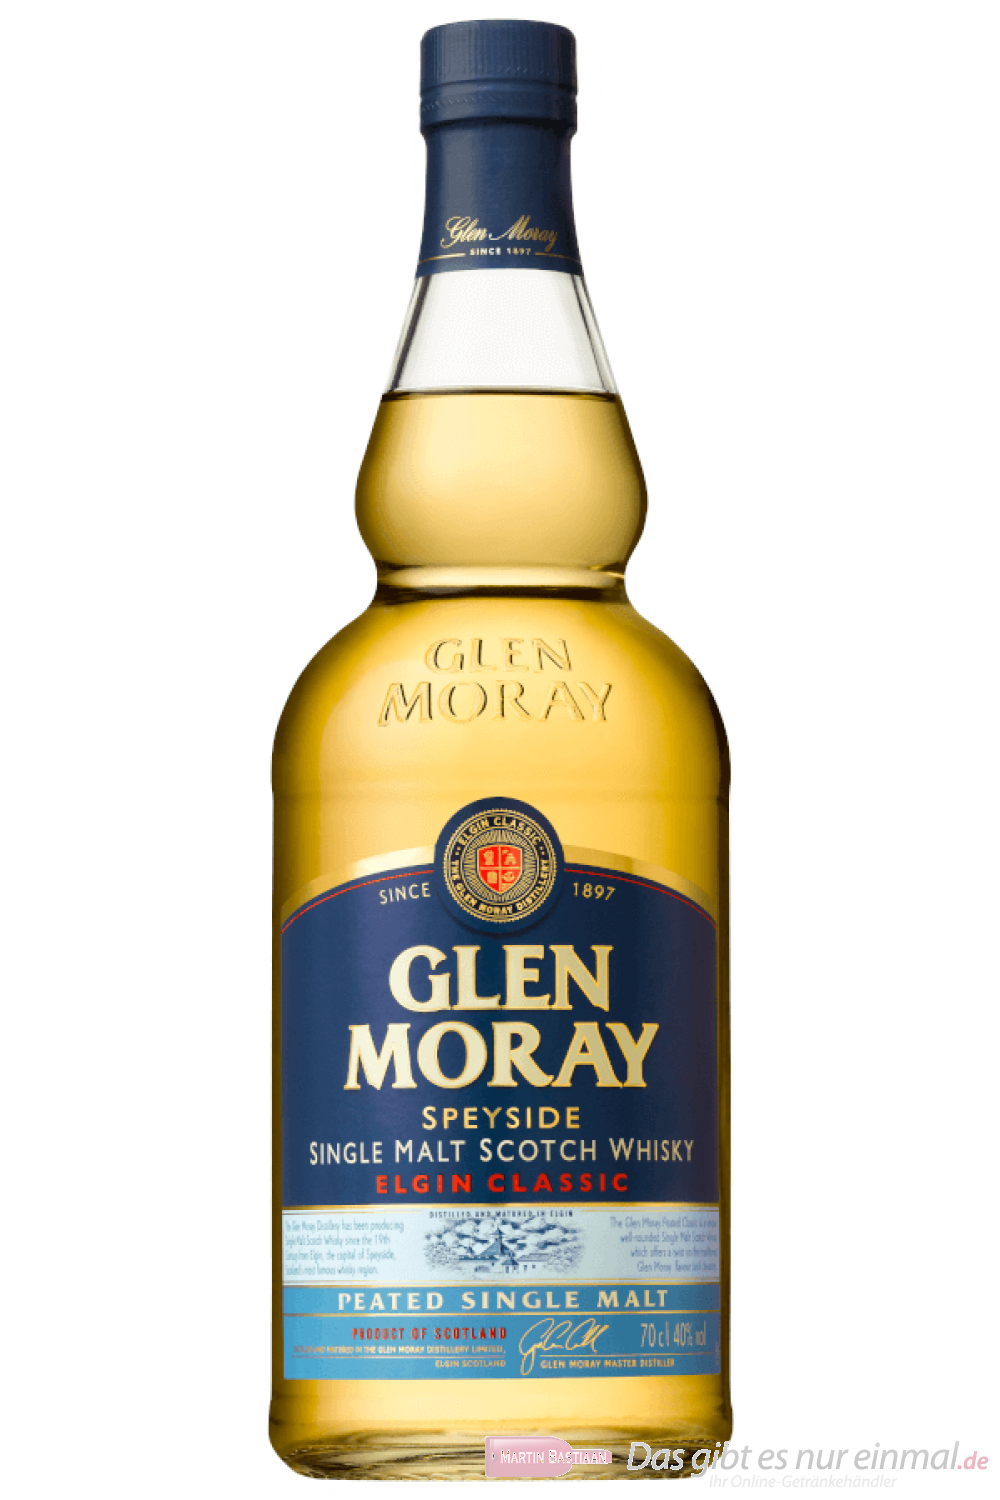 Glen Moray Elgin Classic Peated 0,7l bottle